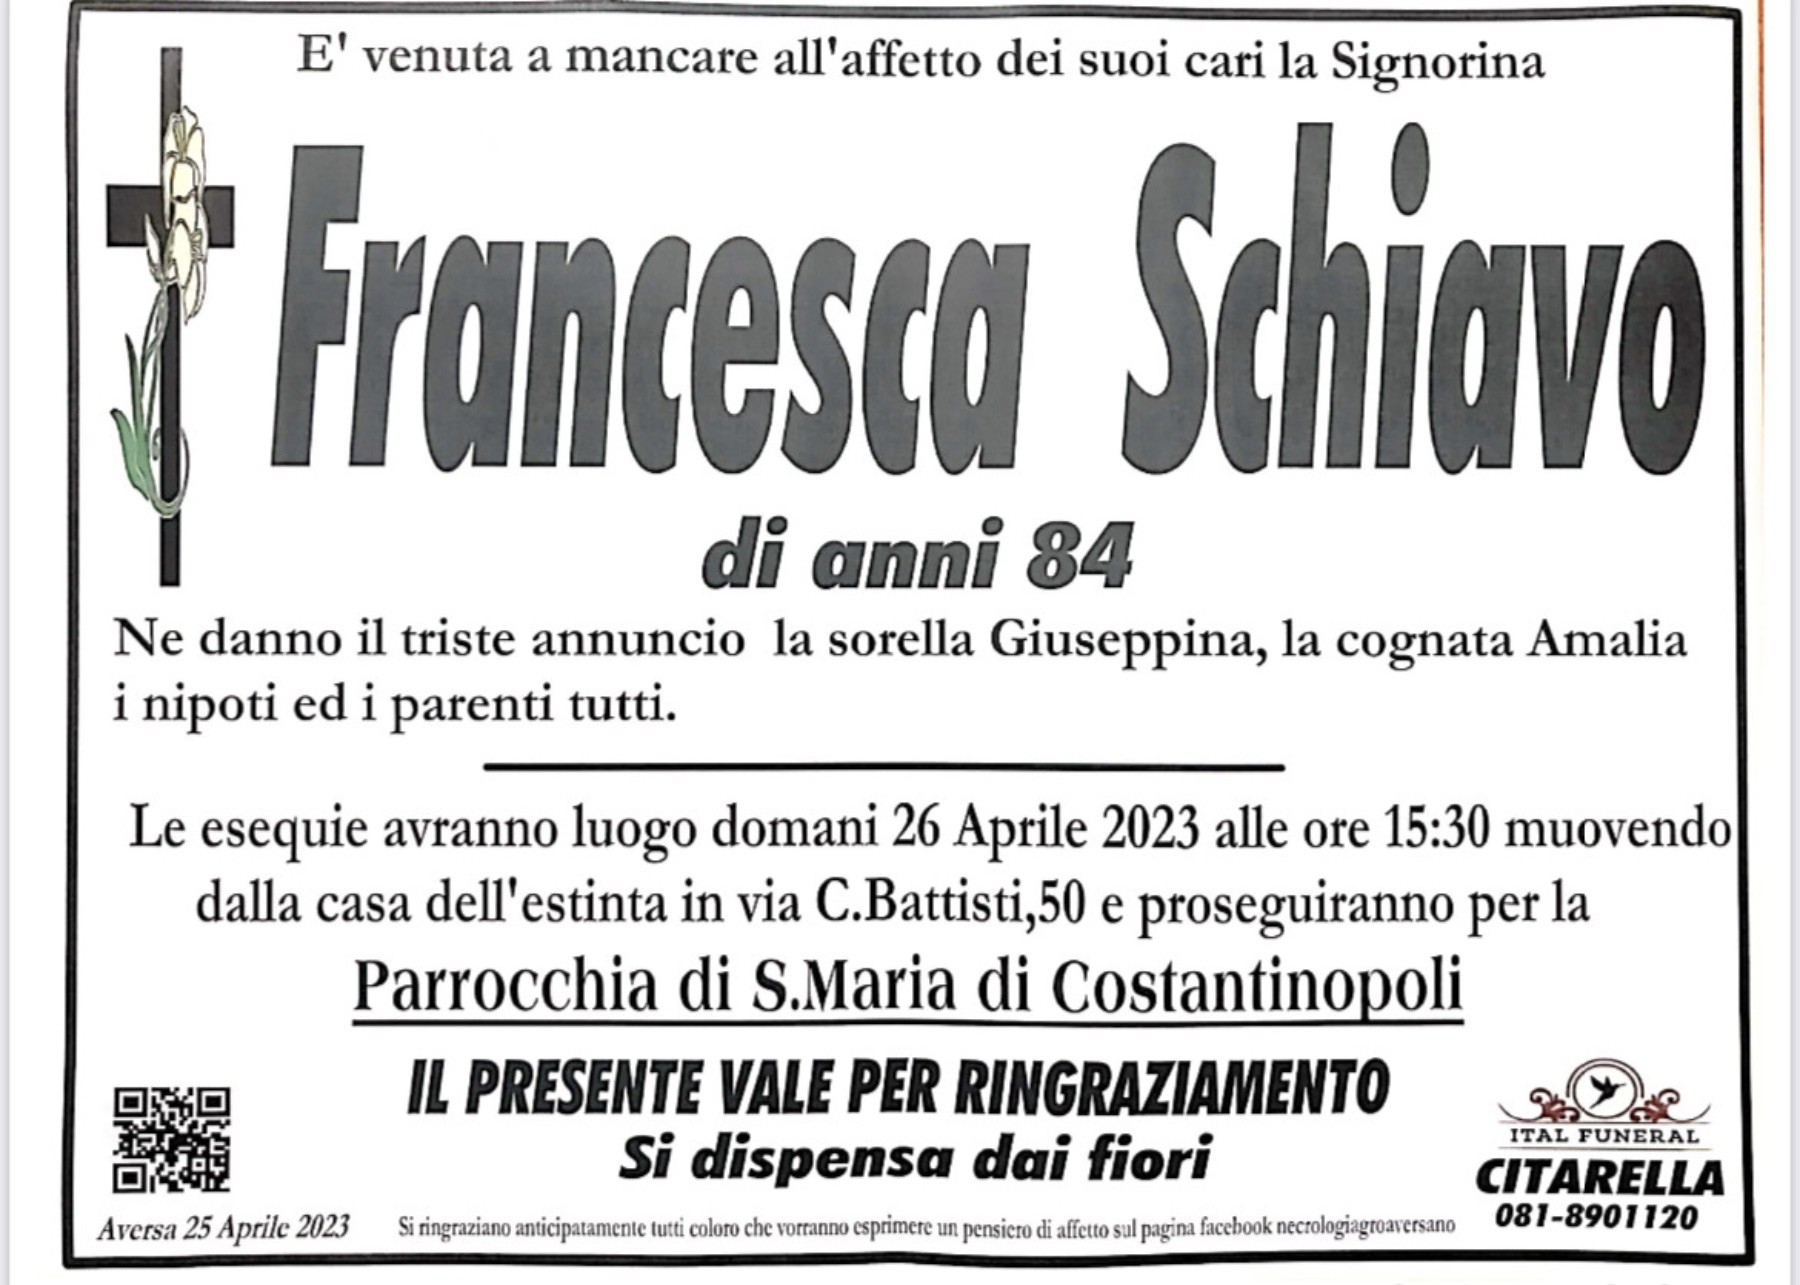 Francesca Schiavo